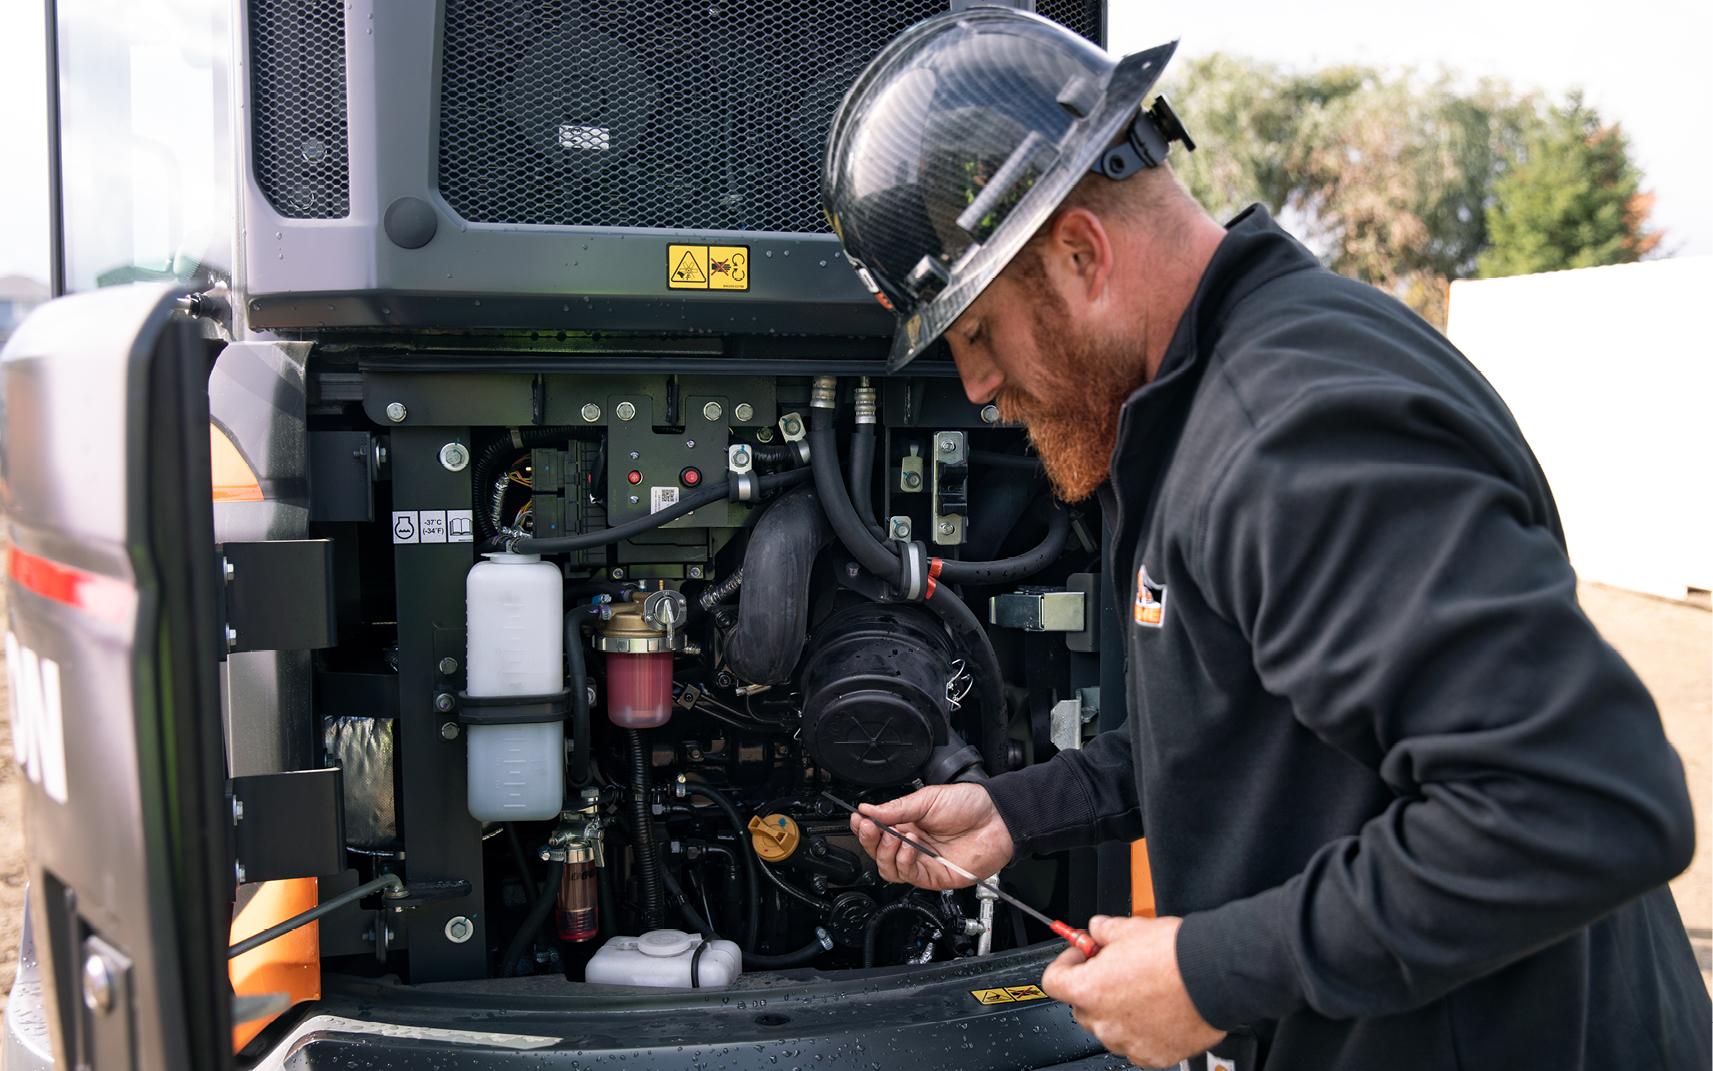 An operator checks the engine oil of a mini excavator.